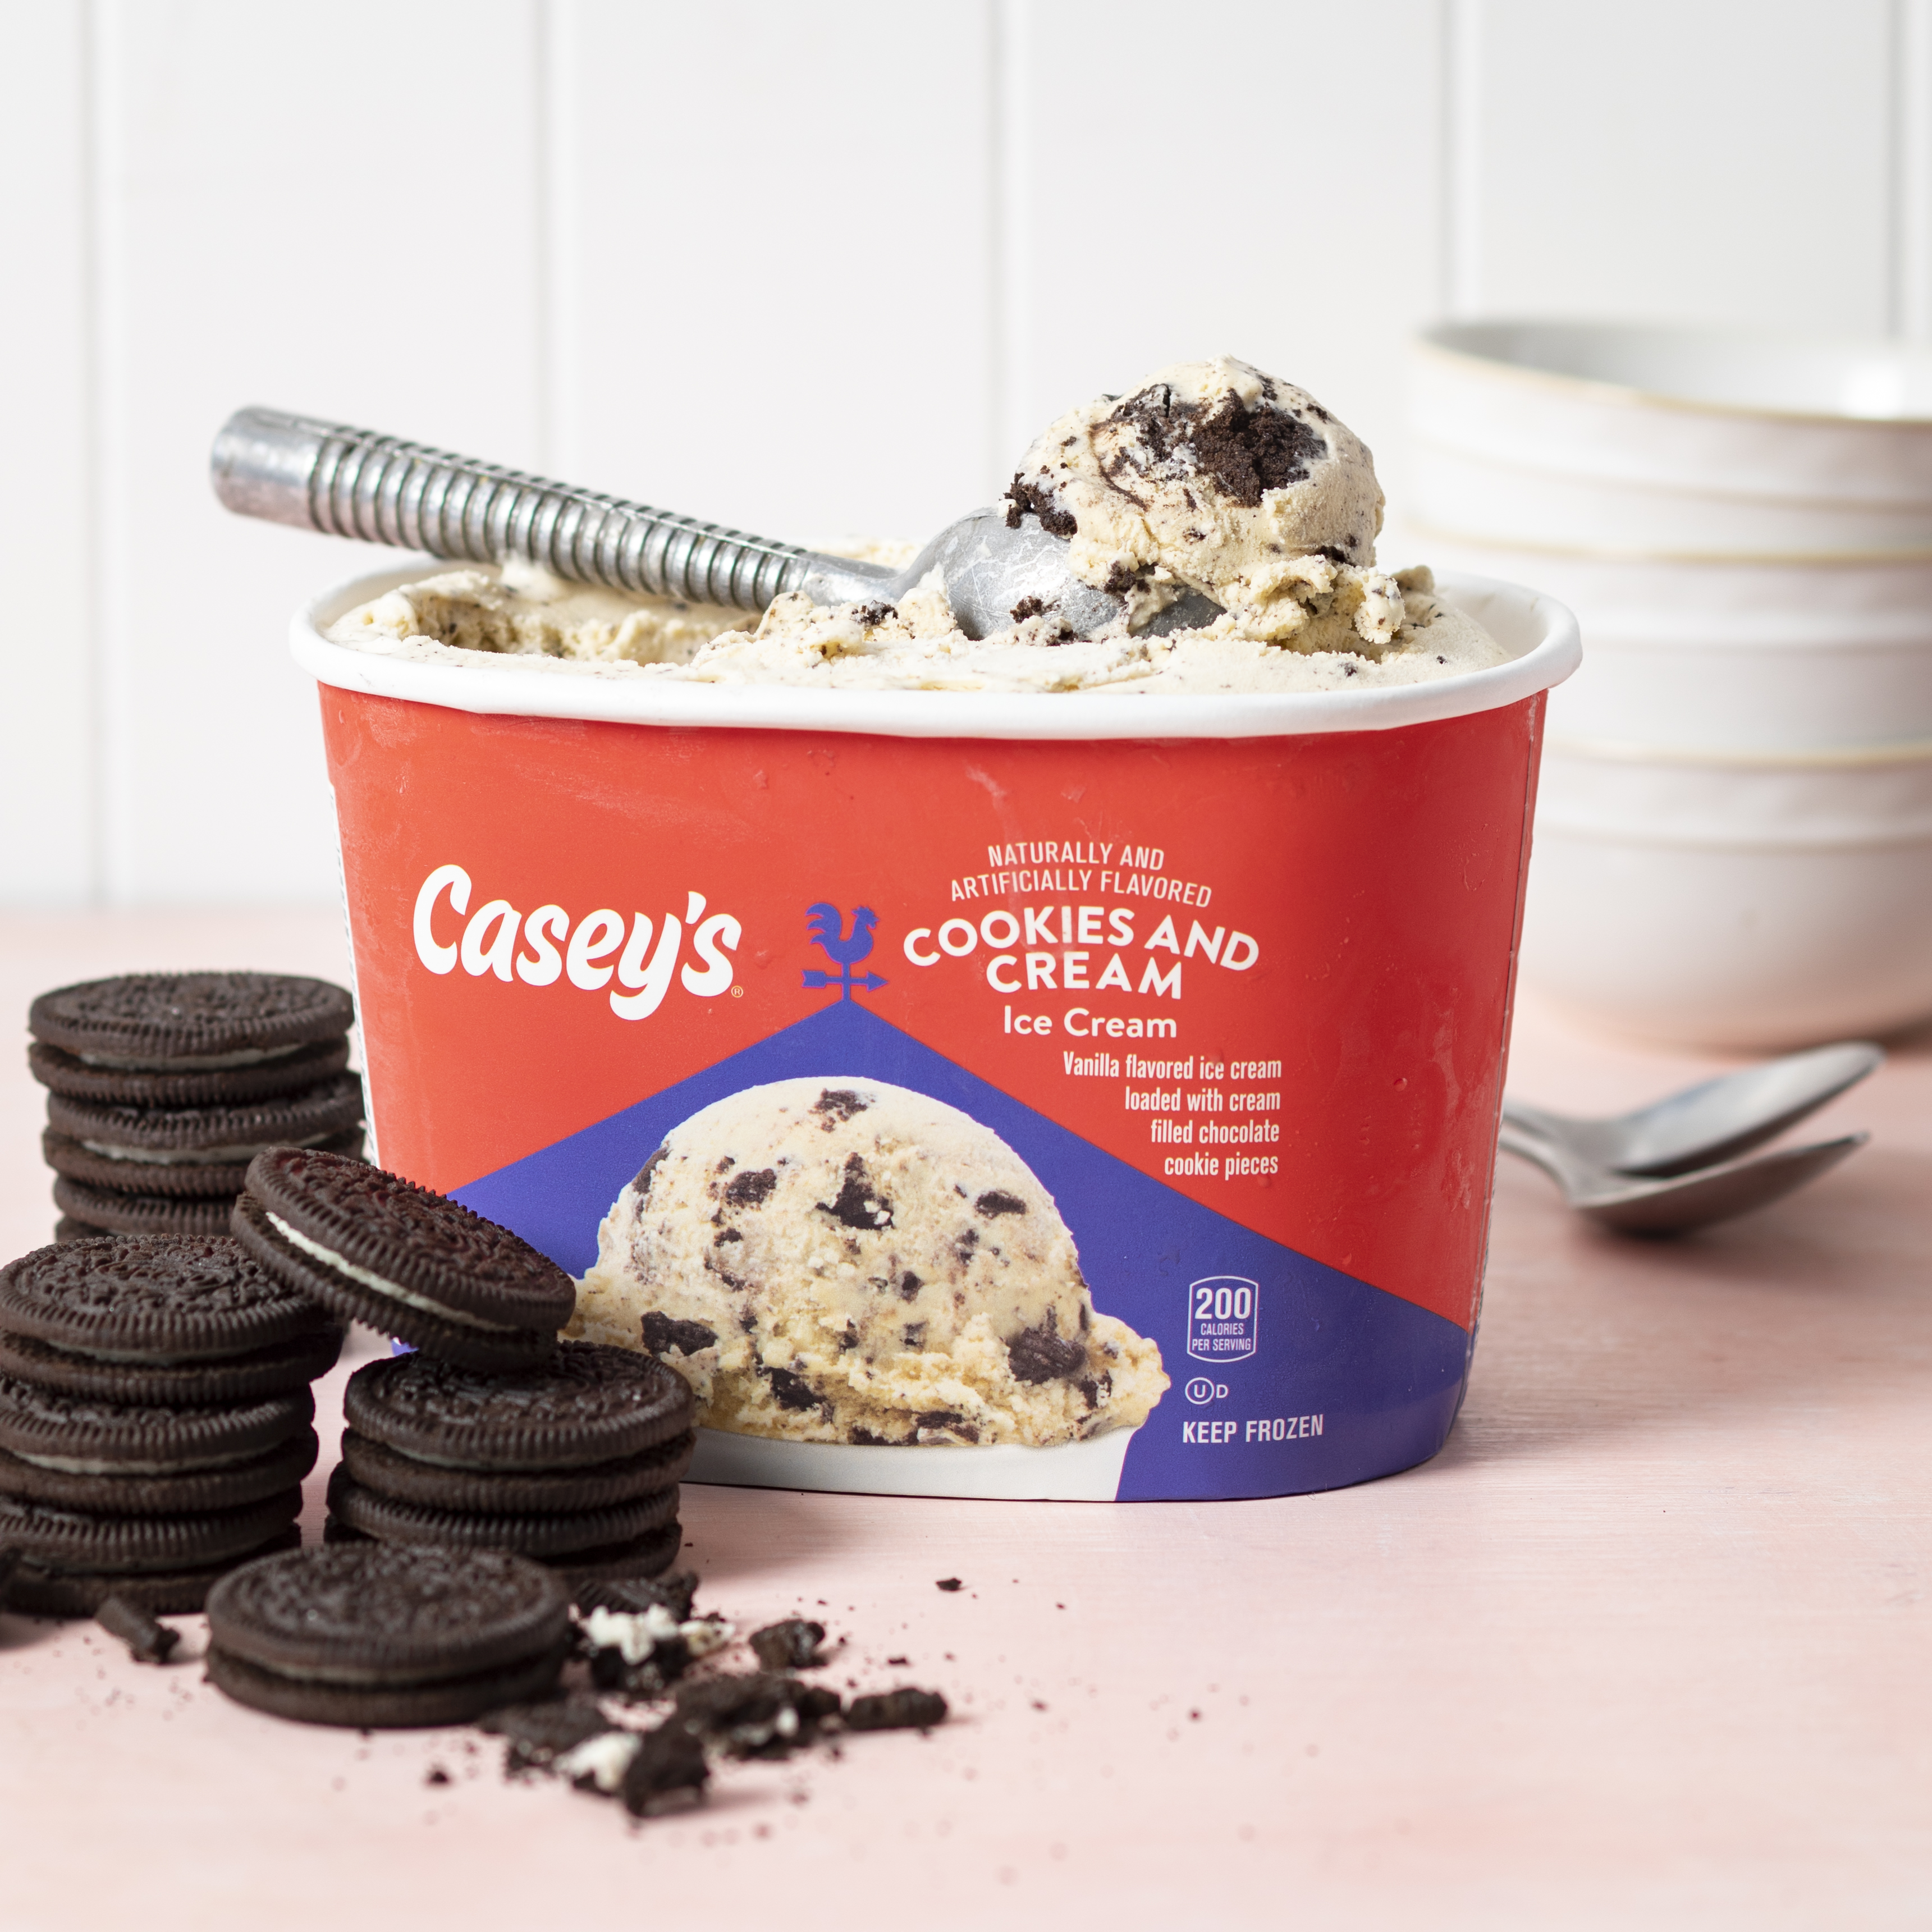 Casey's Cookies & Cream Ice Cream with Oreo cookies on a table